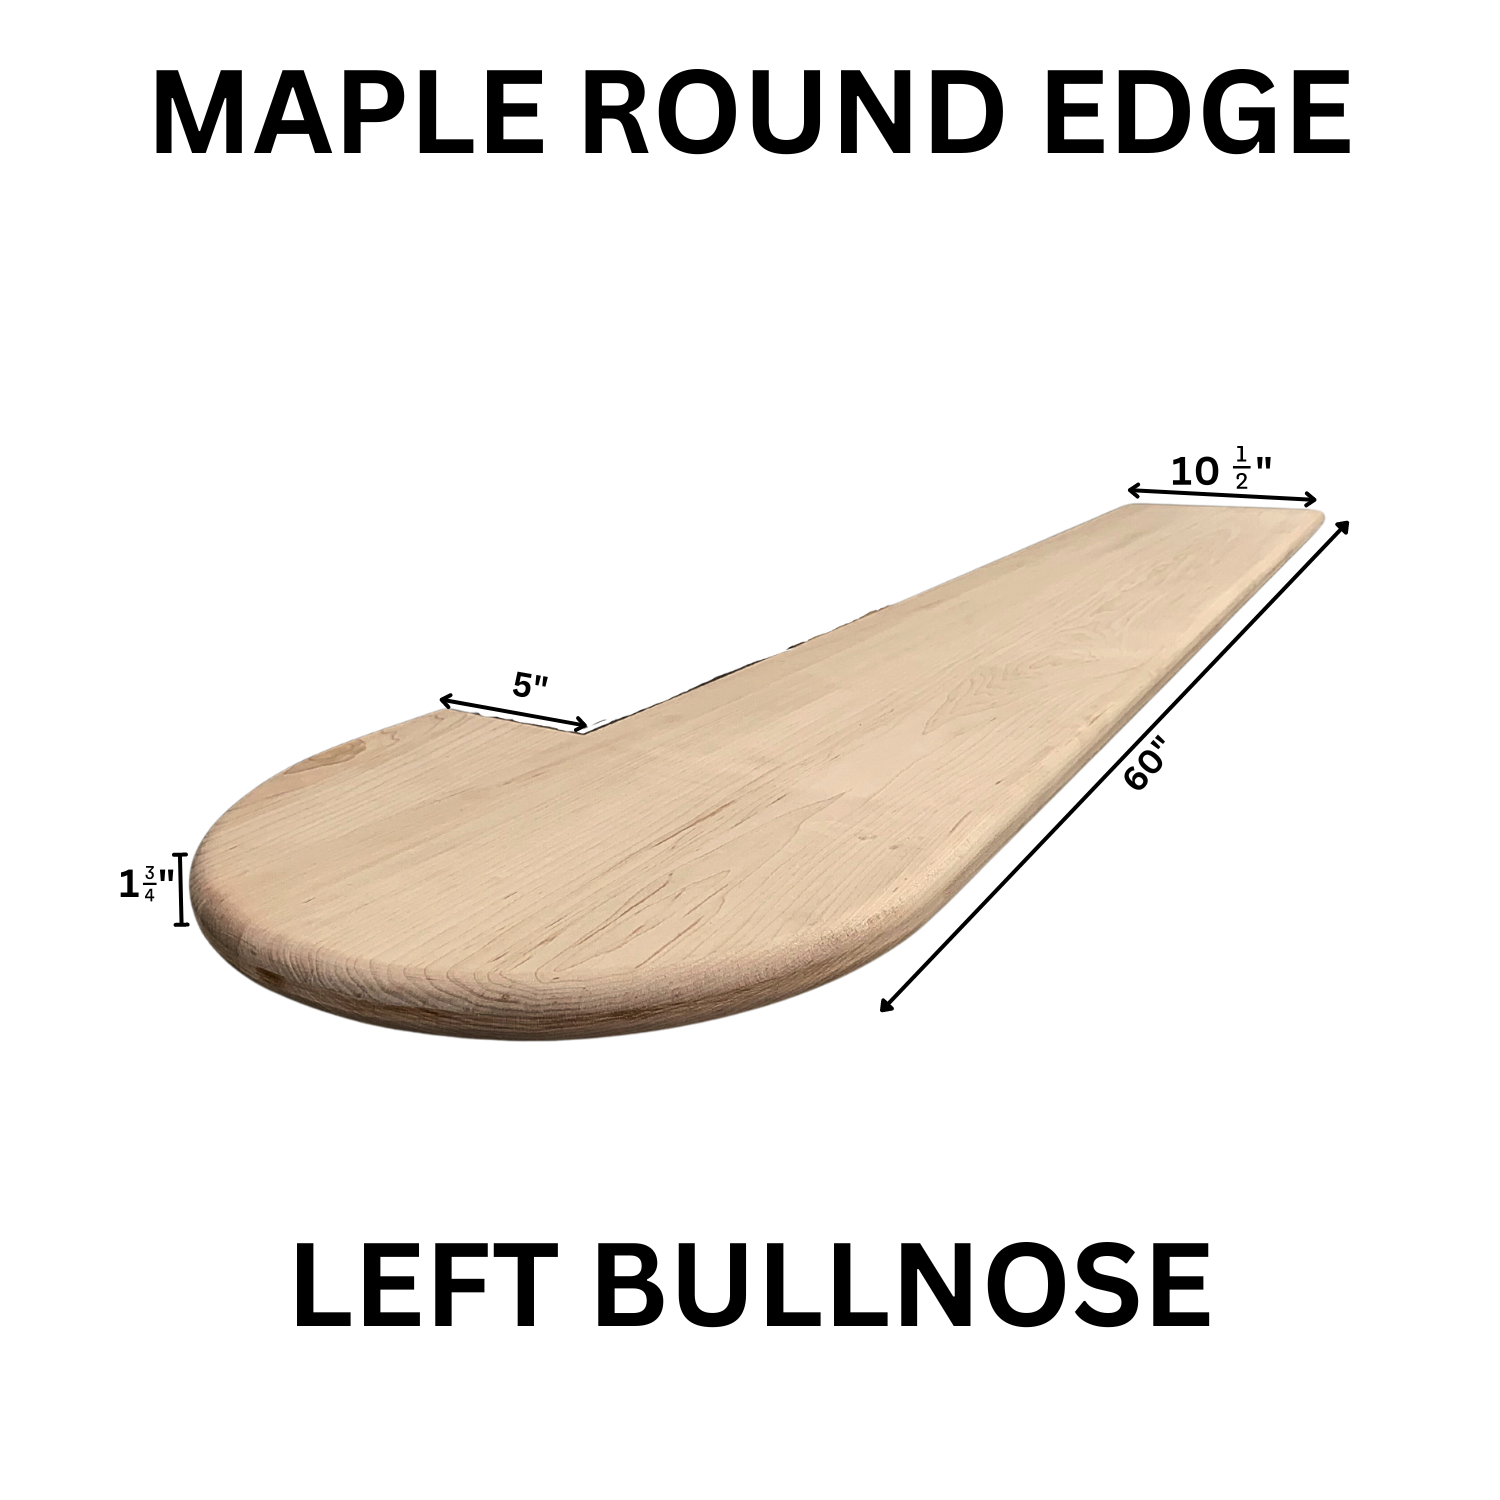 Maple Round Edge Tread Bullnose Left MRET-BL